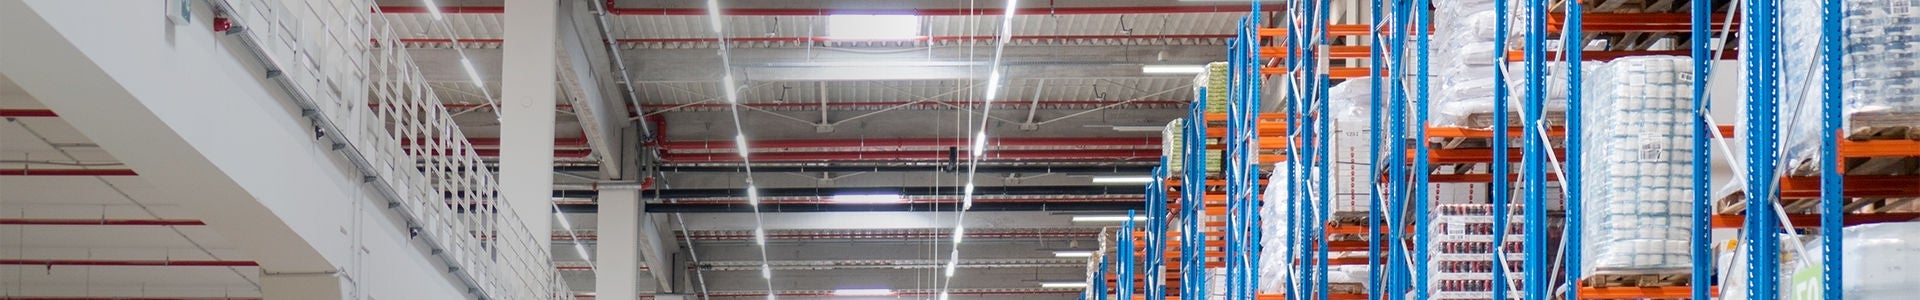 Warehouse lighting and lighting control